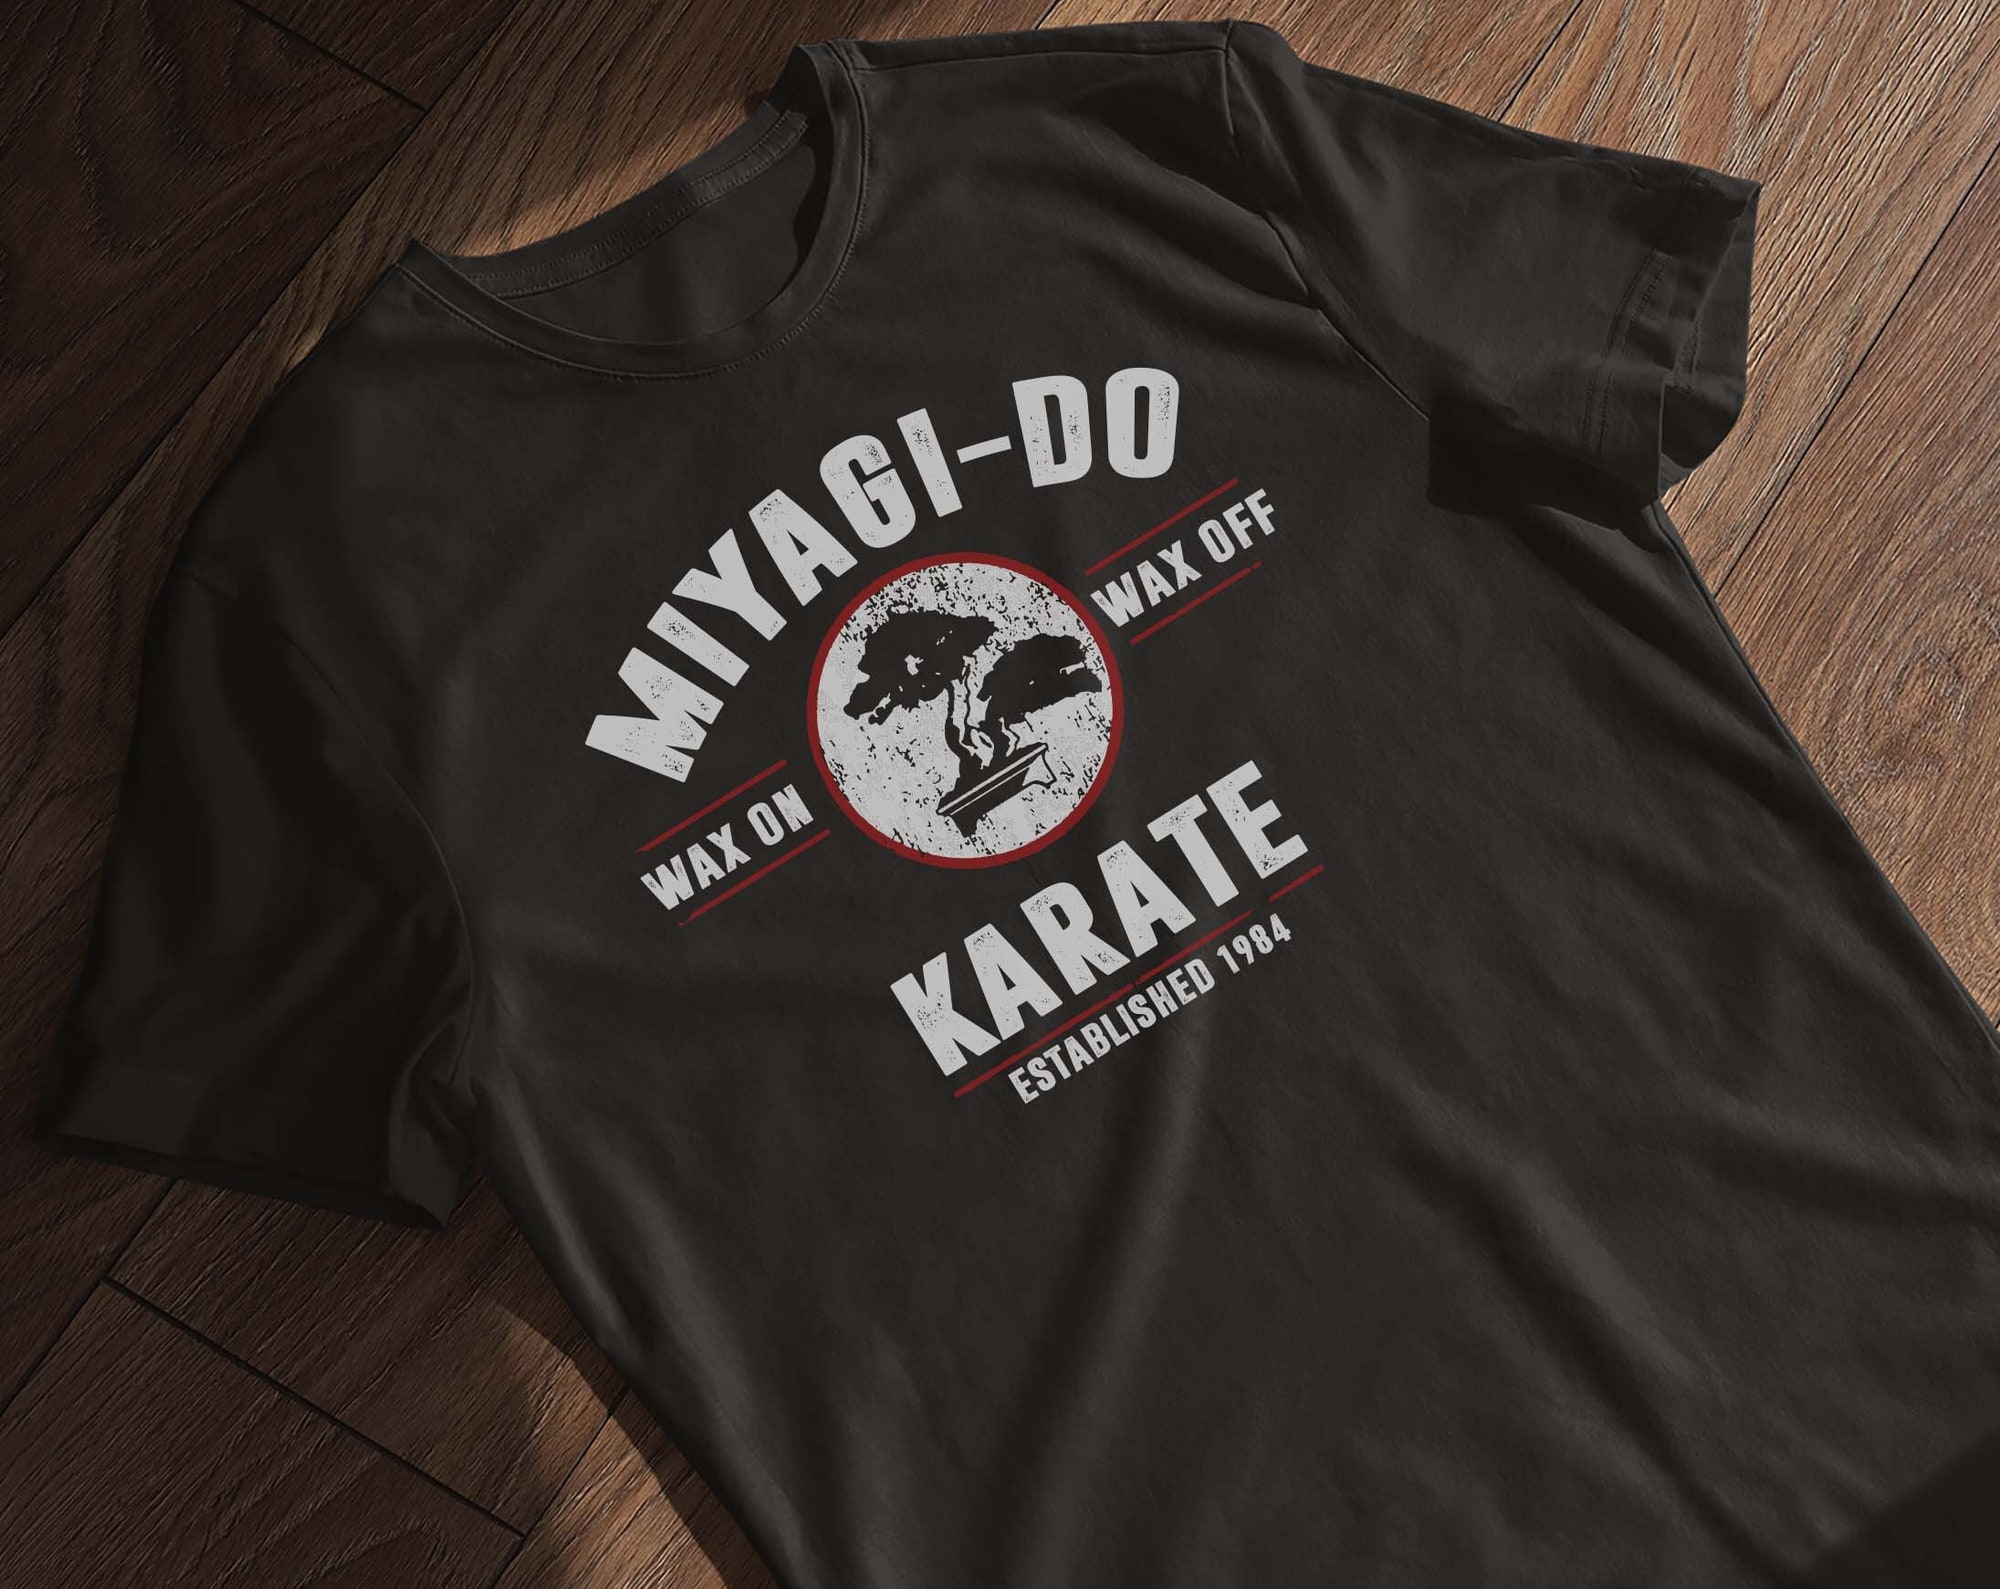 Discover Camiseta Mayagi Karate Vintage para Hombre Mujer